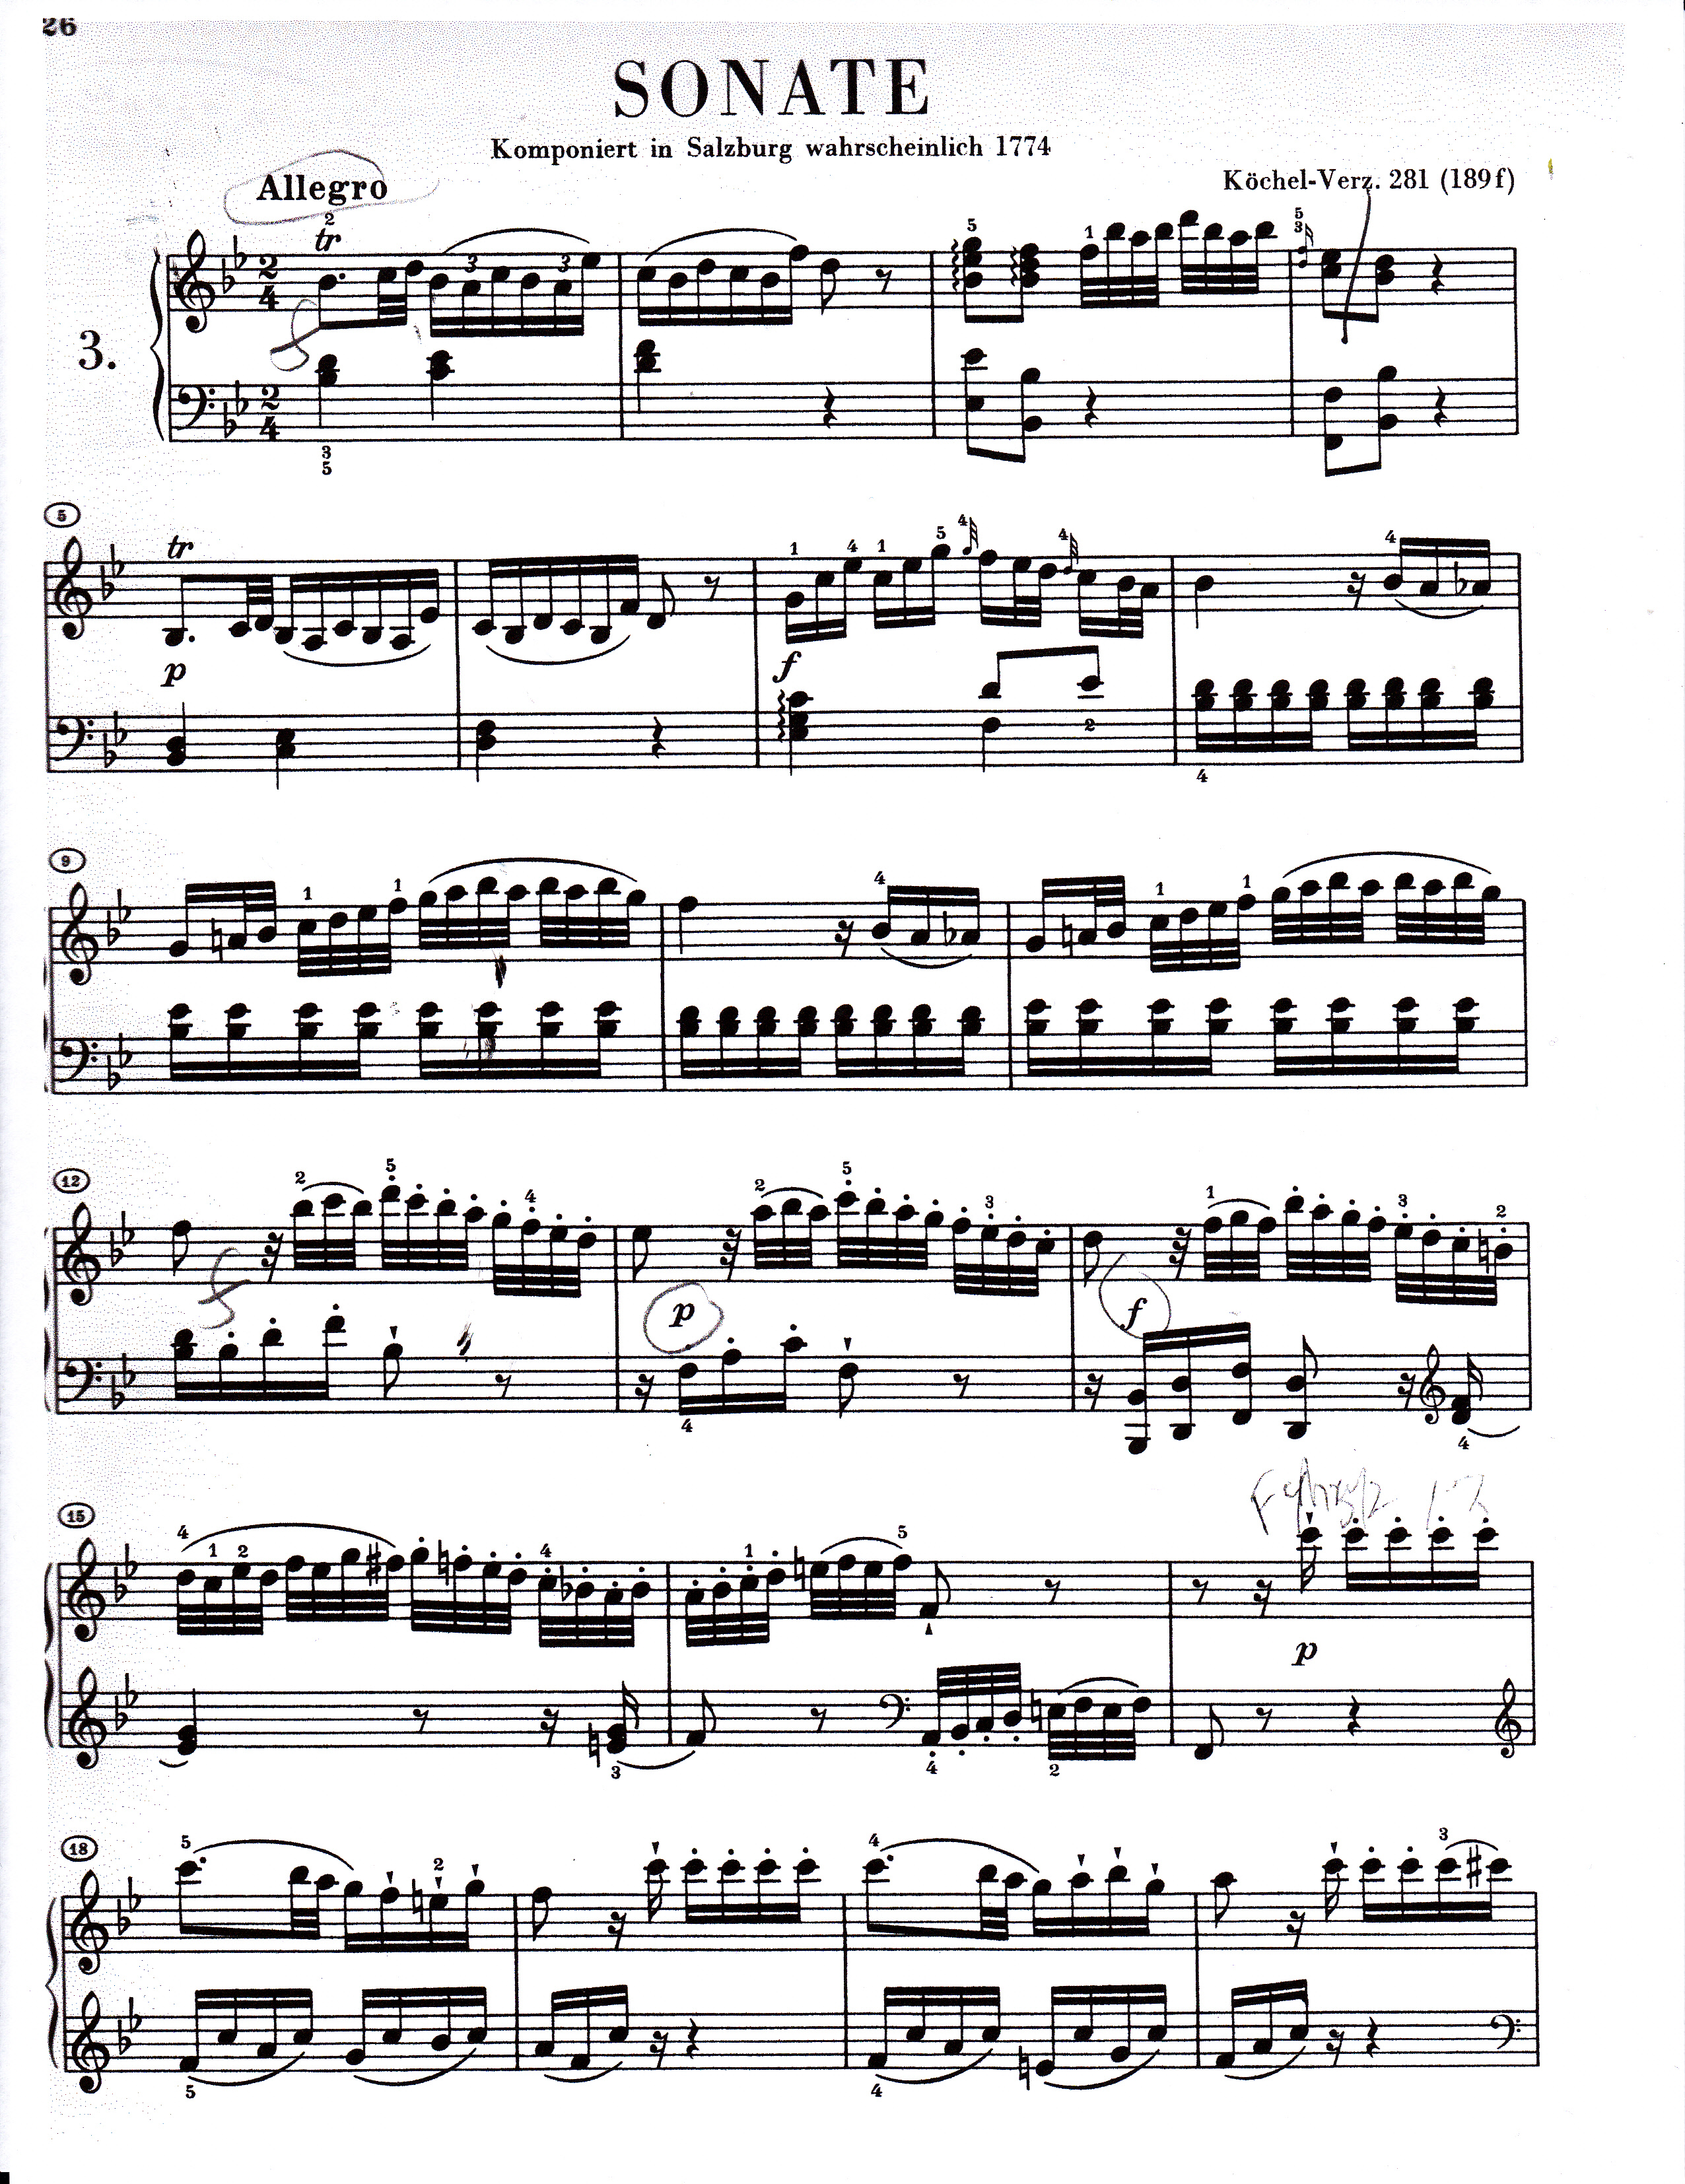 piano scales pdf reddit